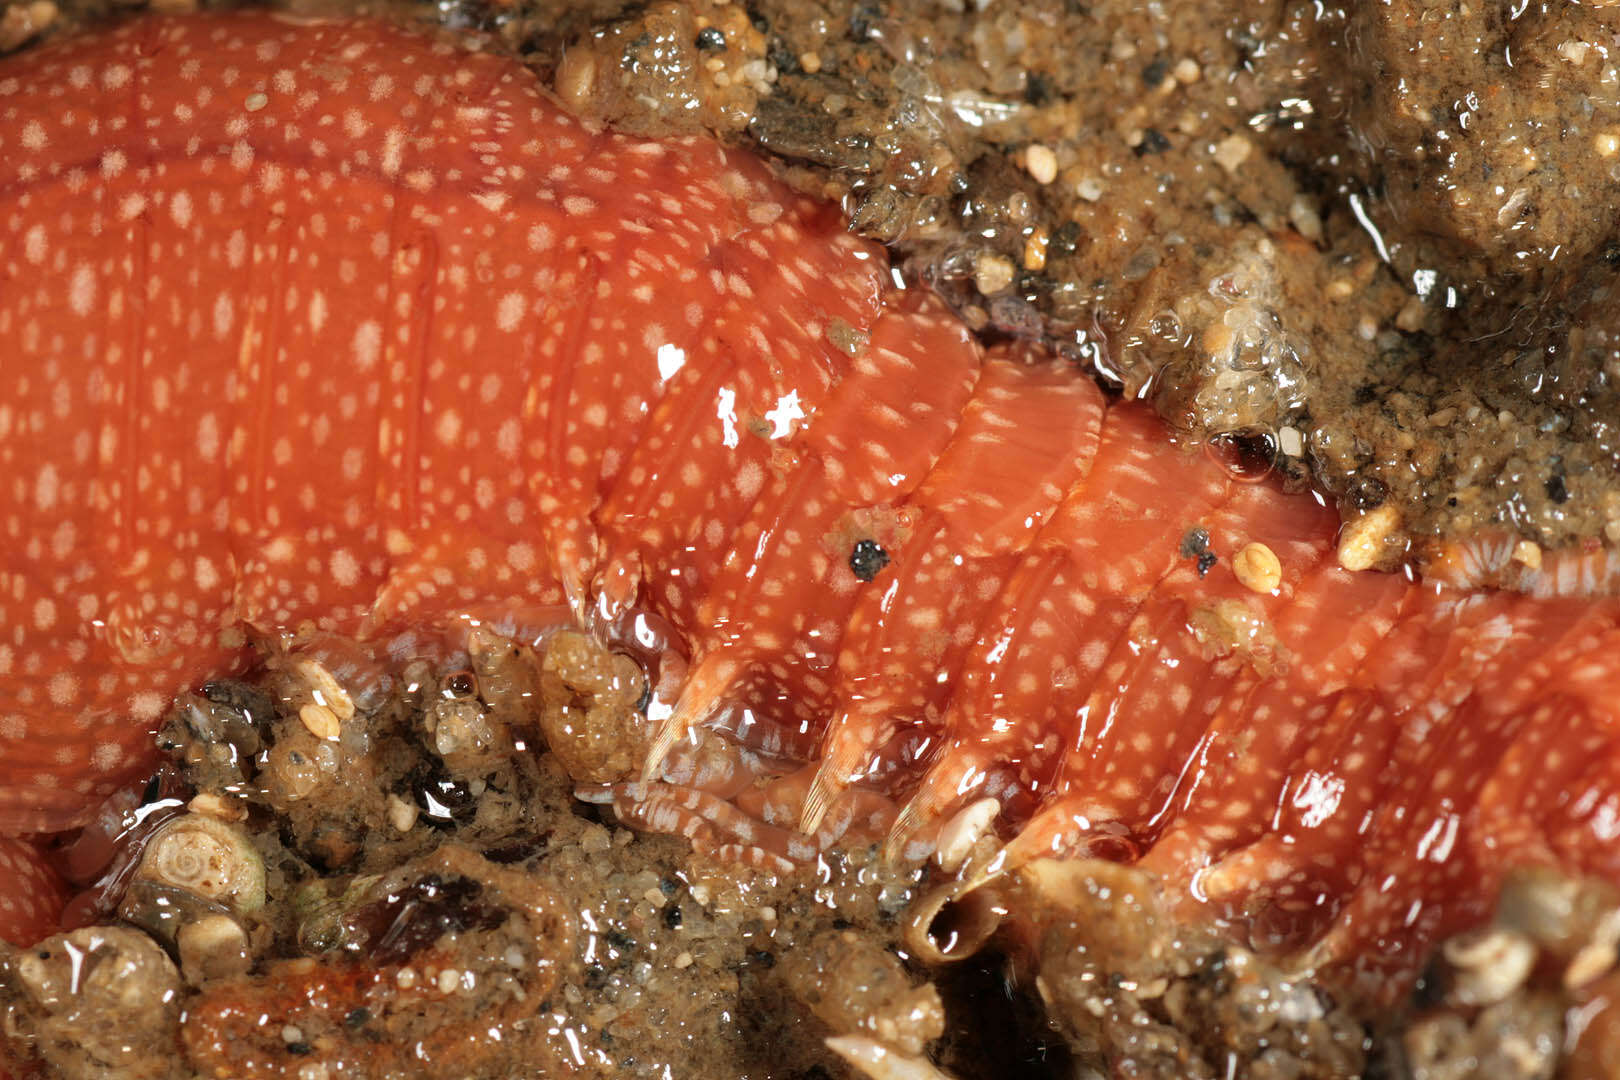 Image of strawberry worm